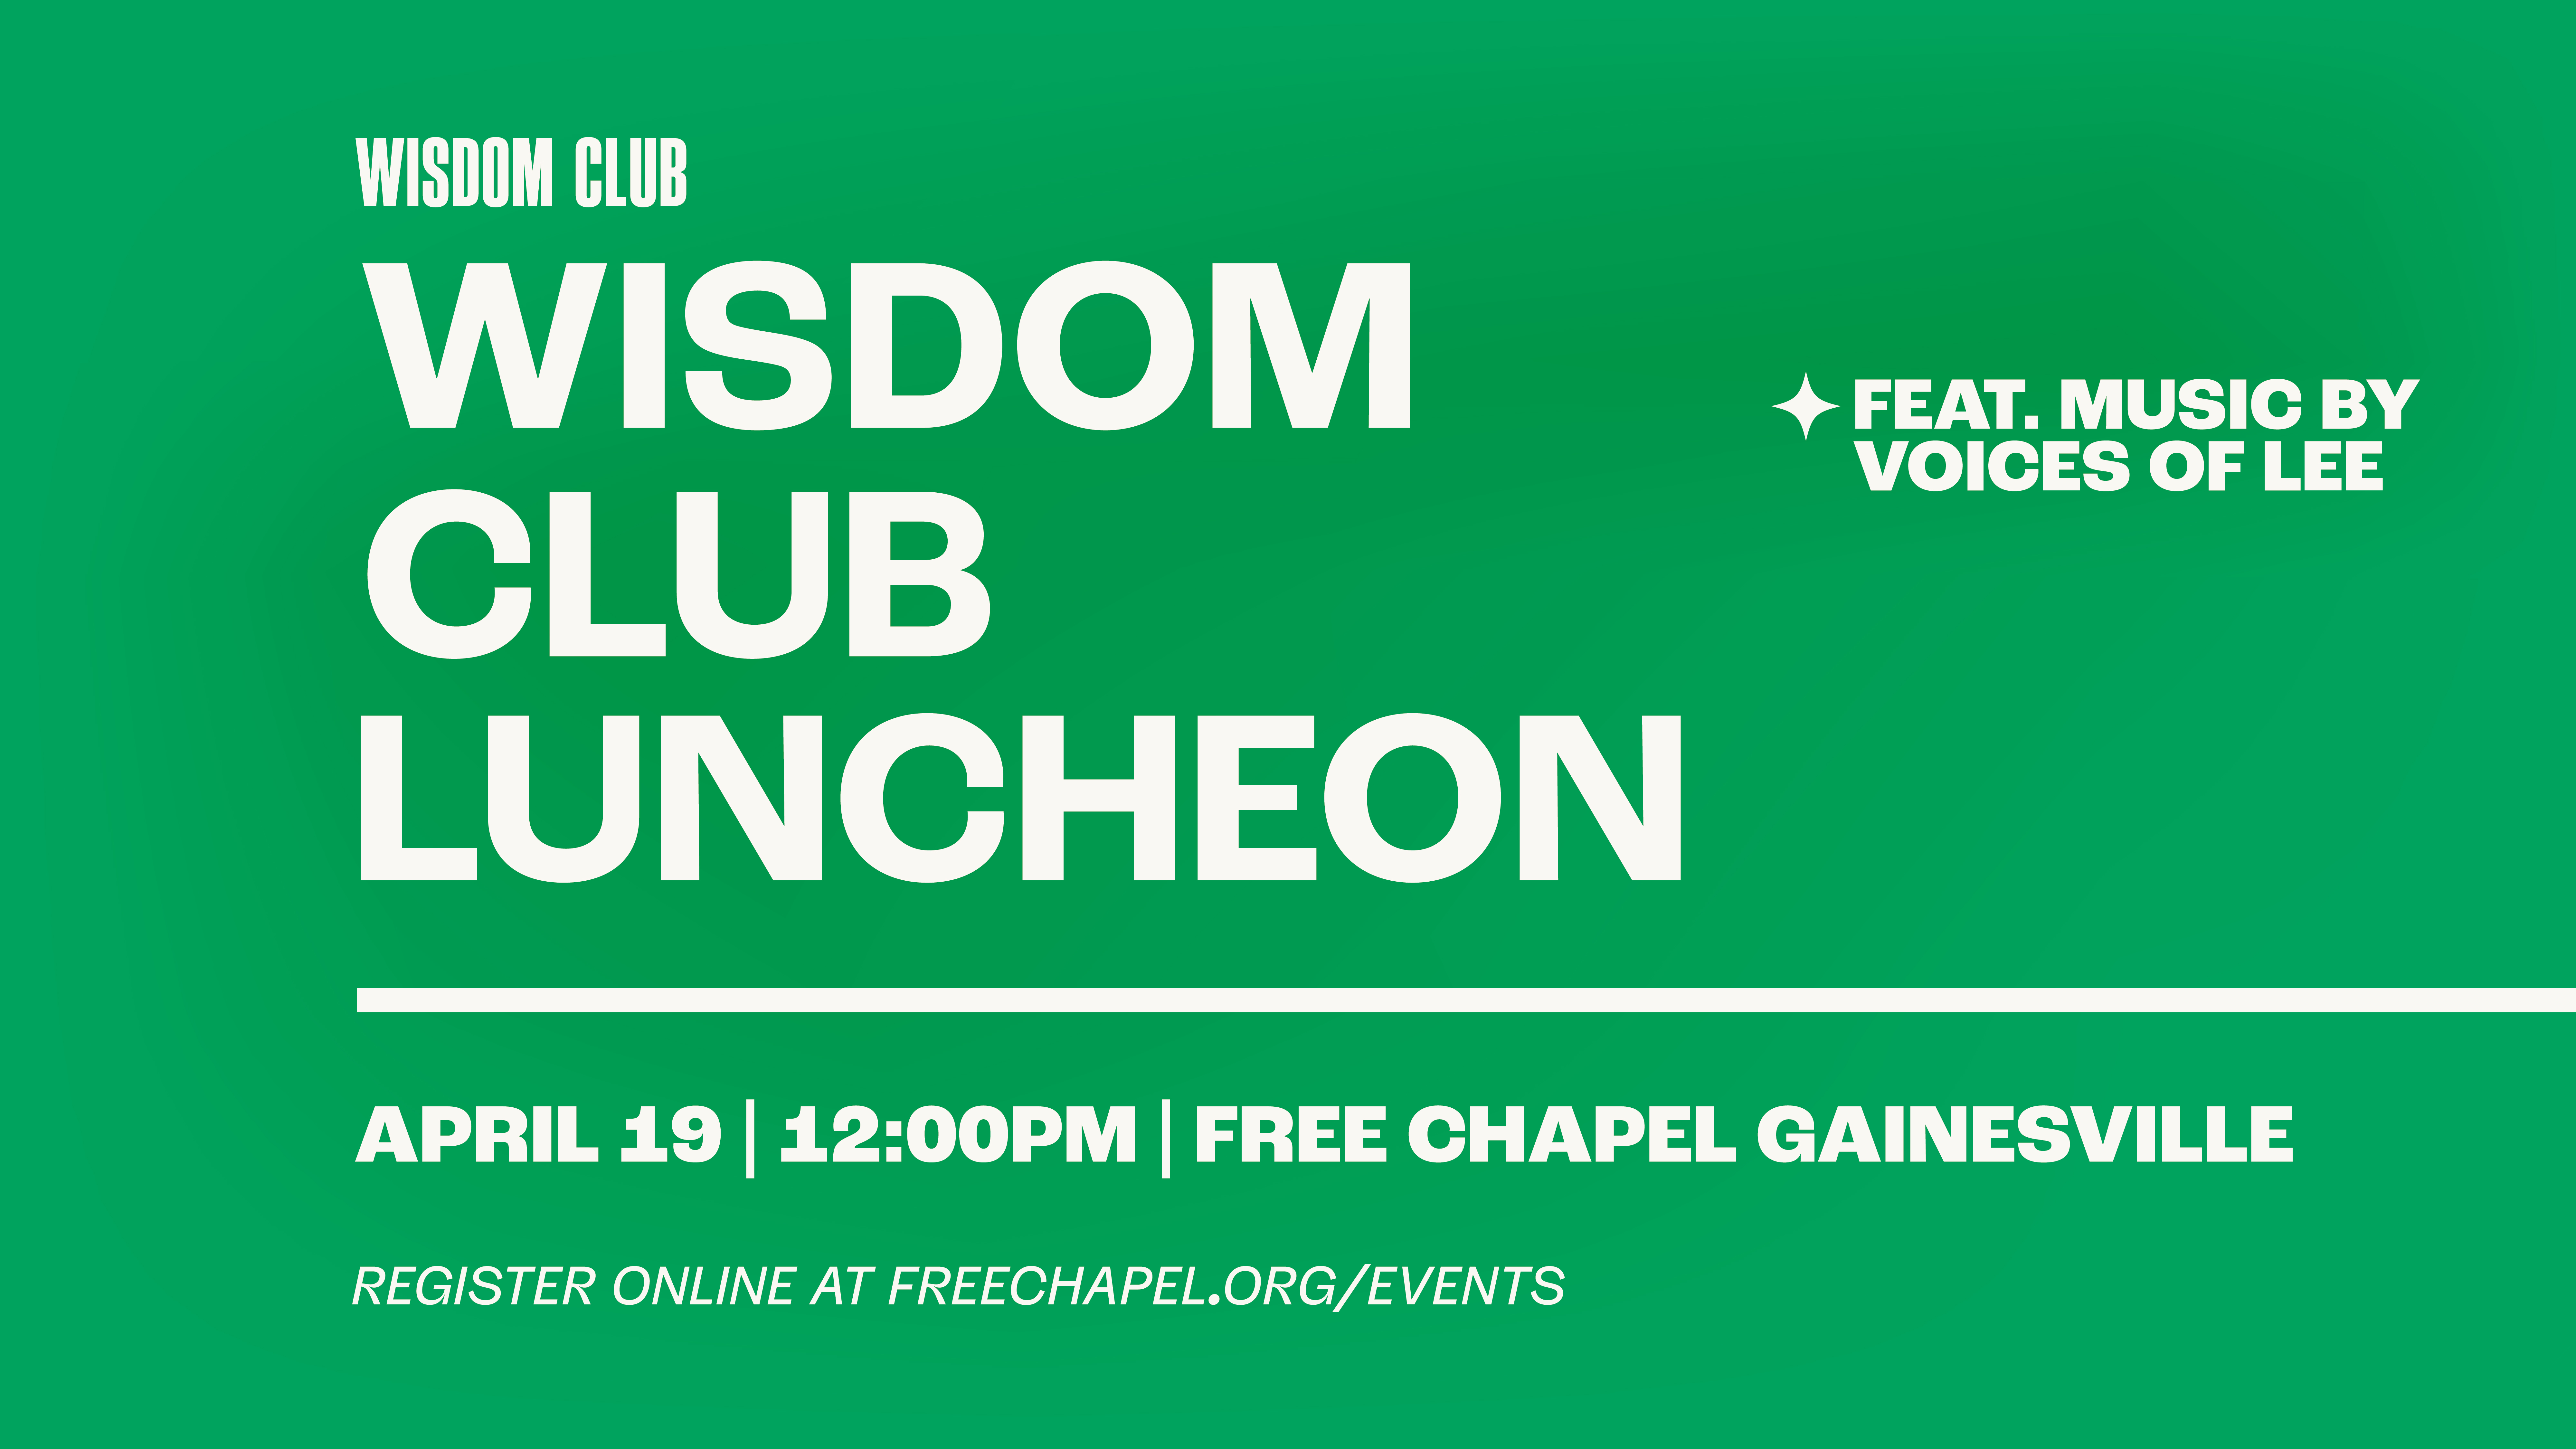 Wisdom Club Luncheon  at the Gwinnett campus